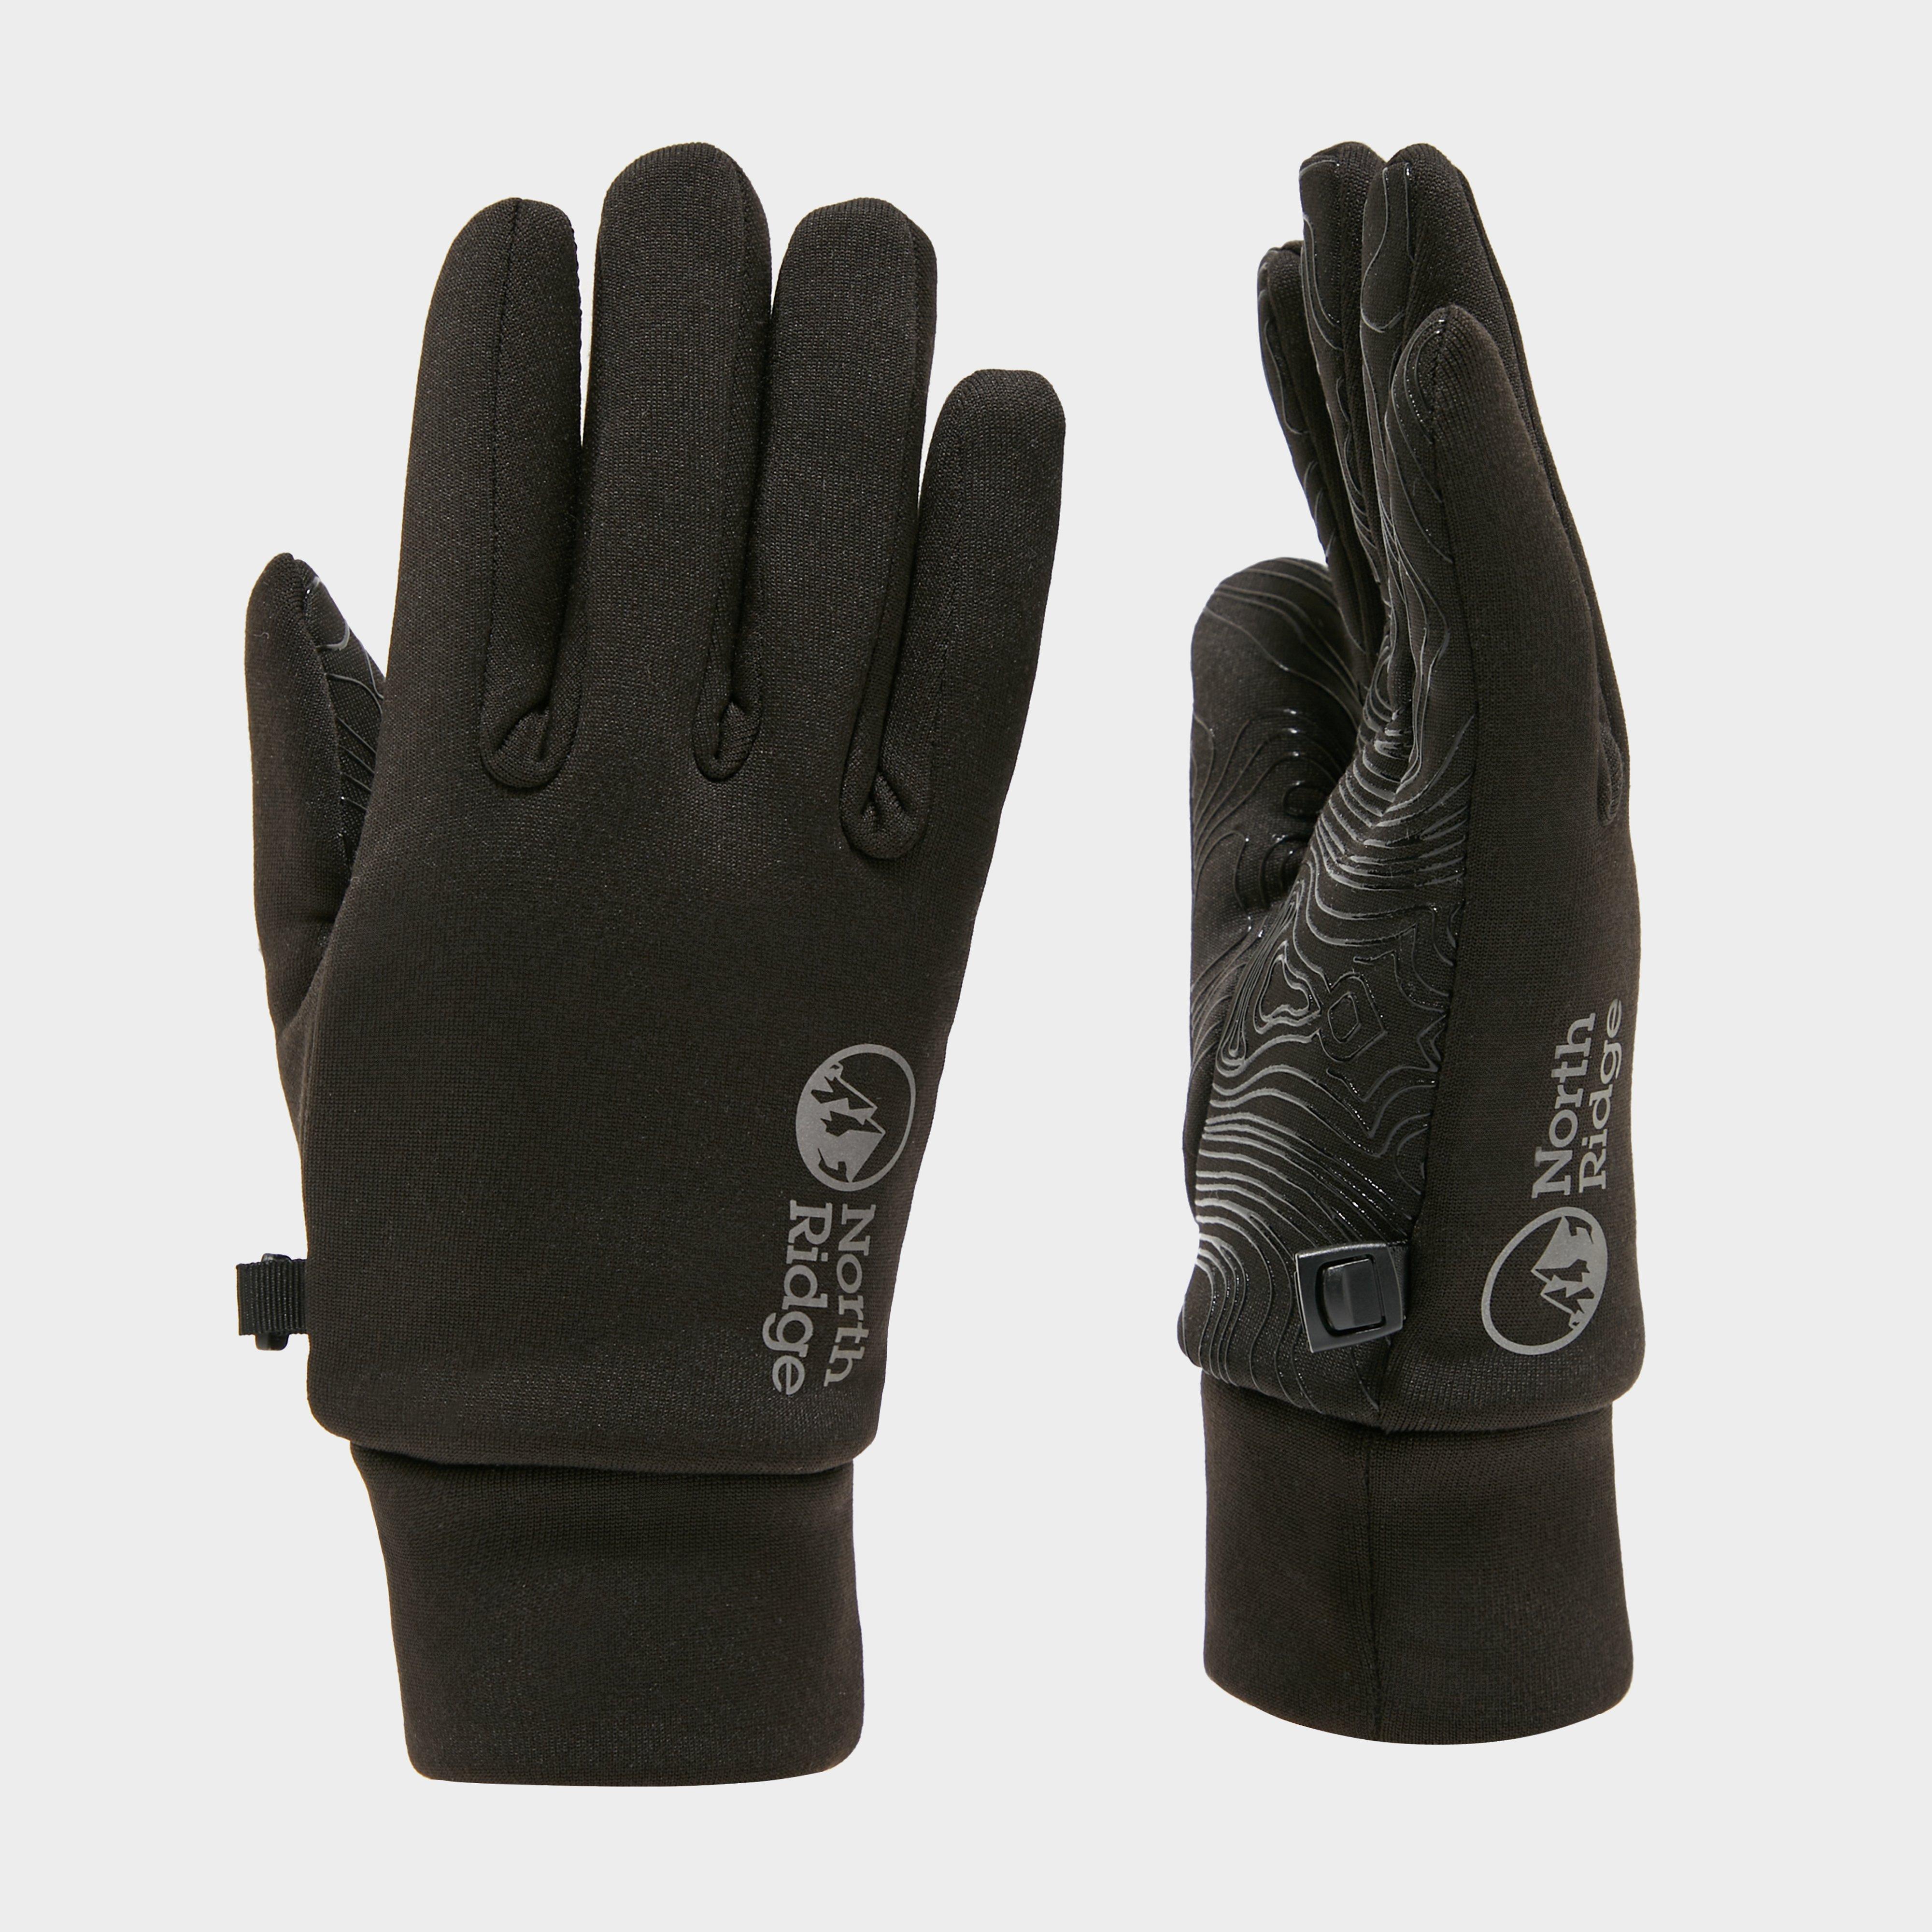 North Ridge Womens Insulated Grip Glove - Black/blk  Black/blk